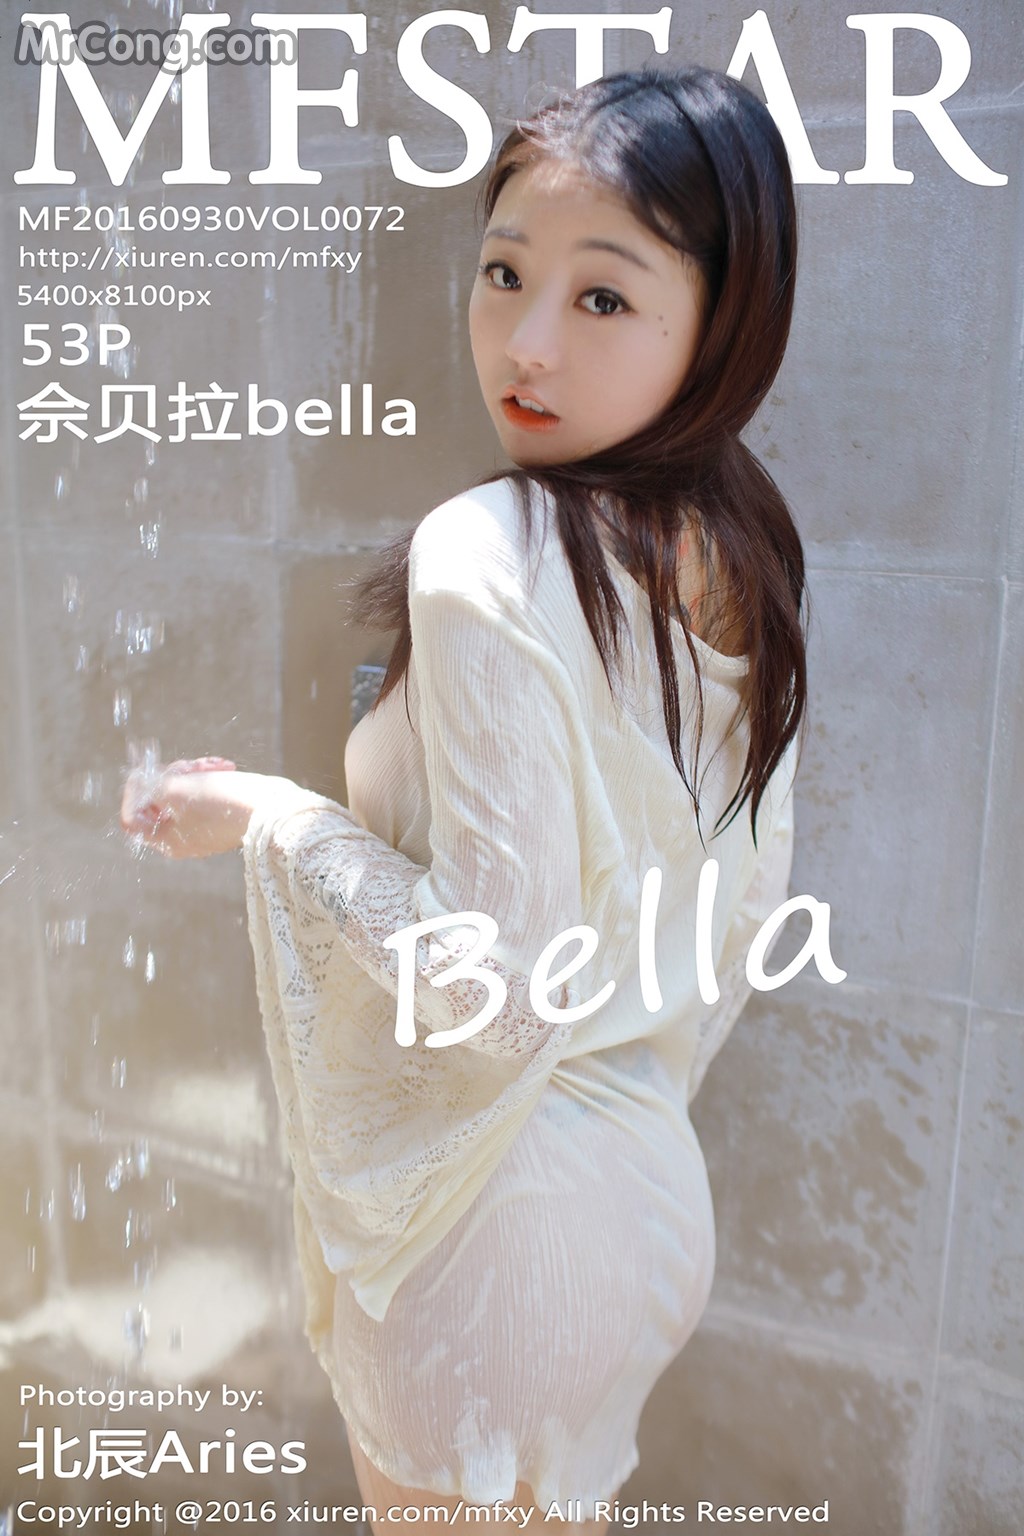 MFStar Vol.072: Model Bella (佘 贝拉) (54 photos)